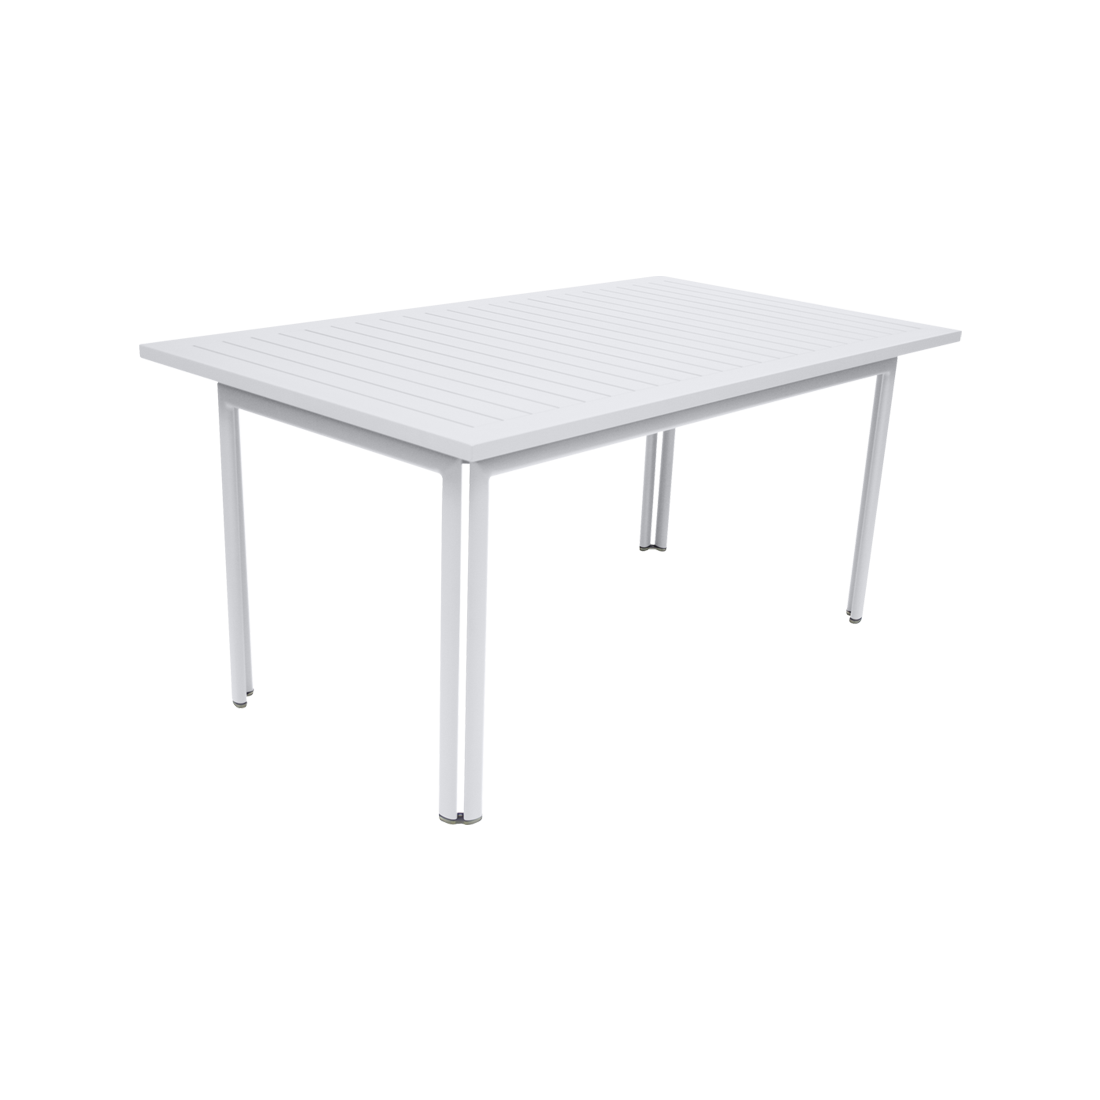 table de jardin, table metal, table rectangulaire, table 6 personnes, table blanche